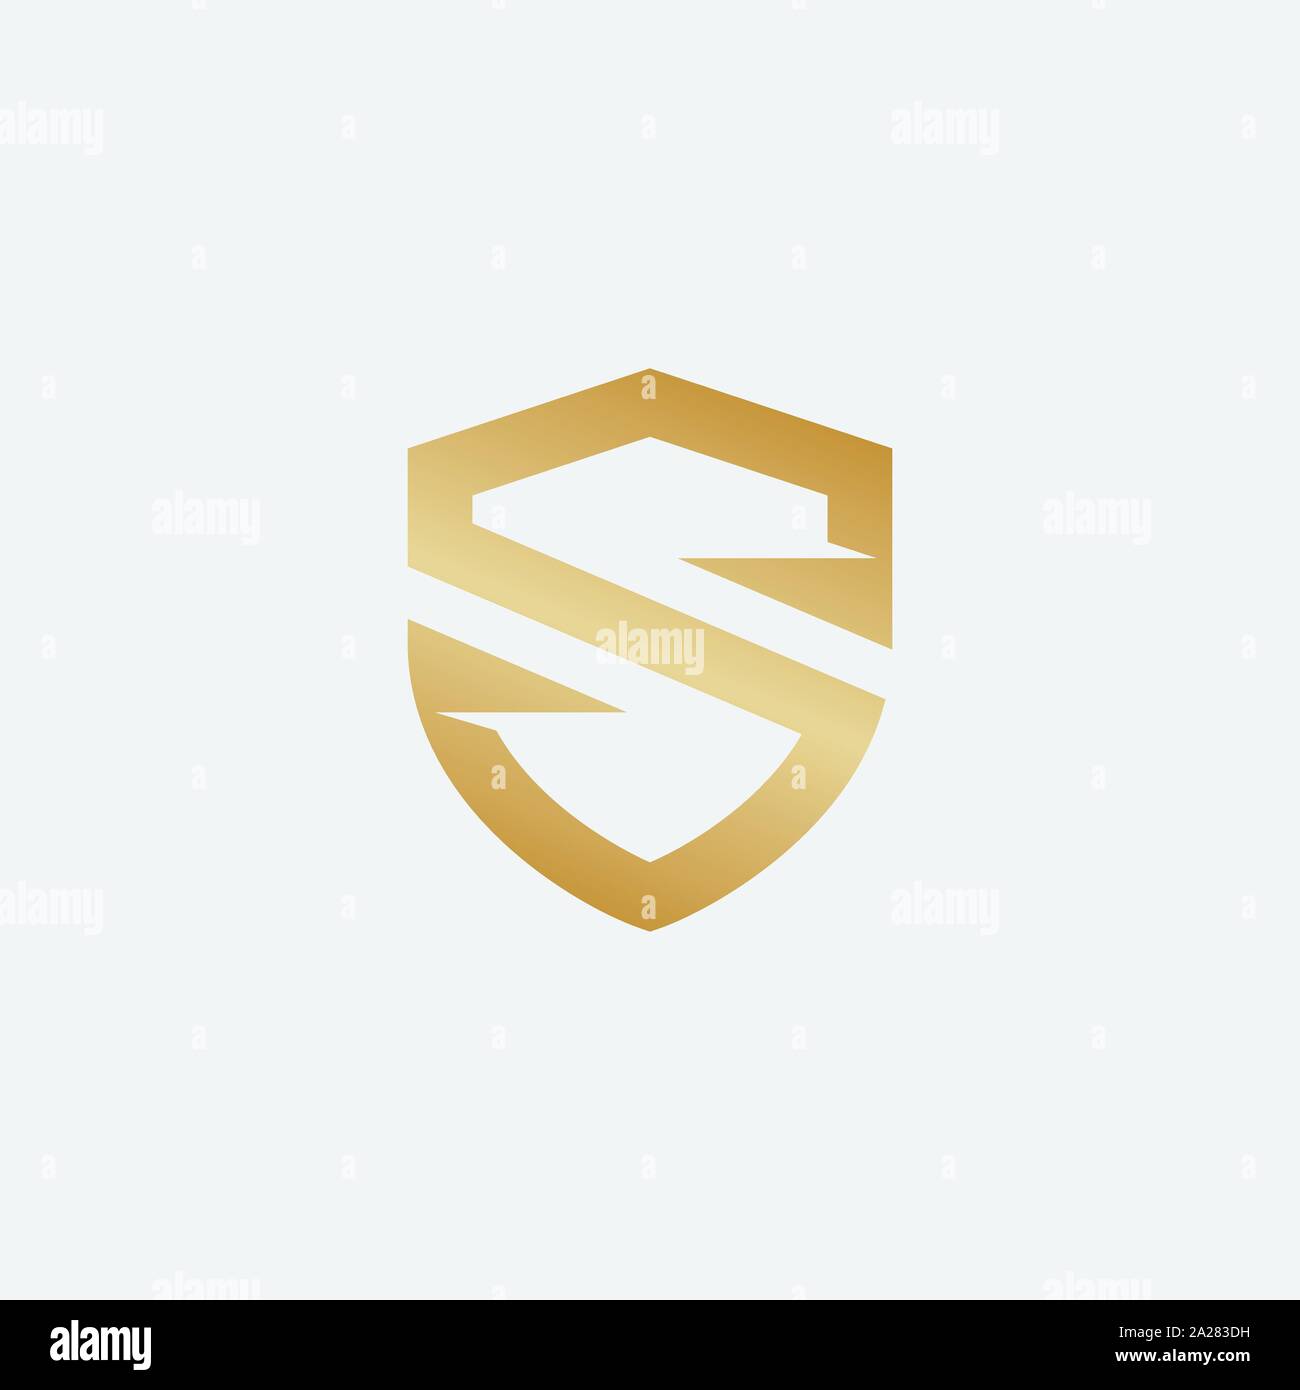 shield icon design illustration, shield logo design template, security logo, protect logo icon, Shield Letter S Logo Stock Vector